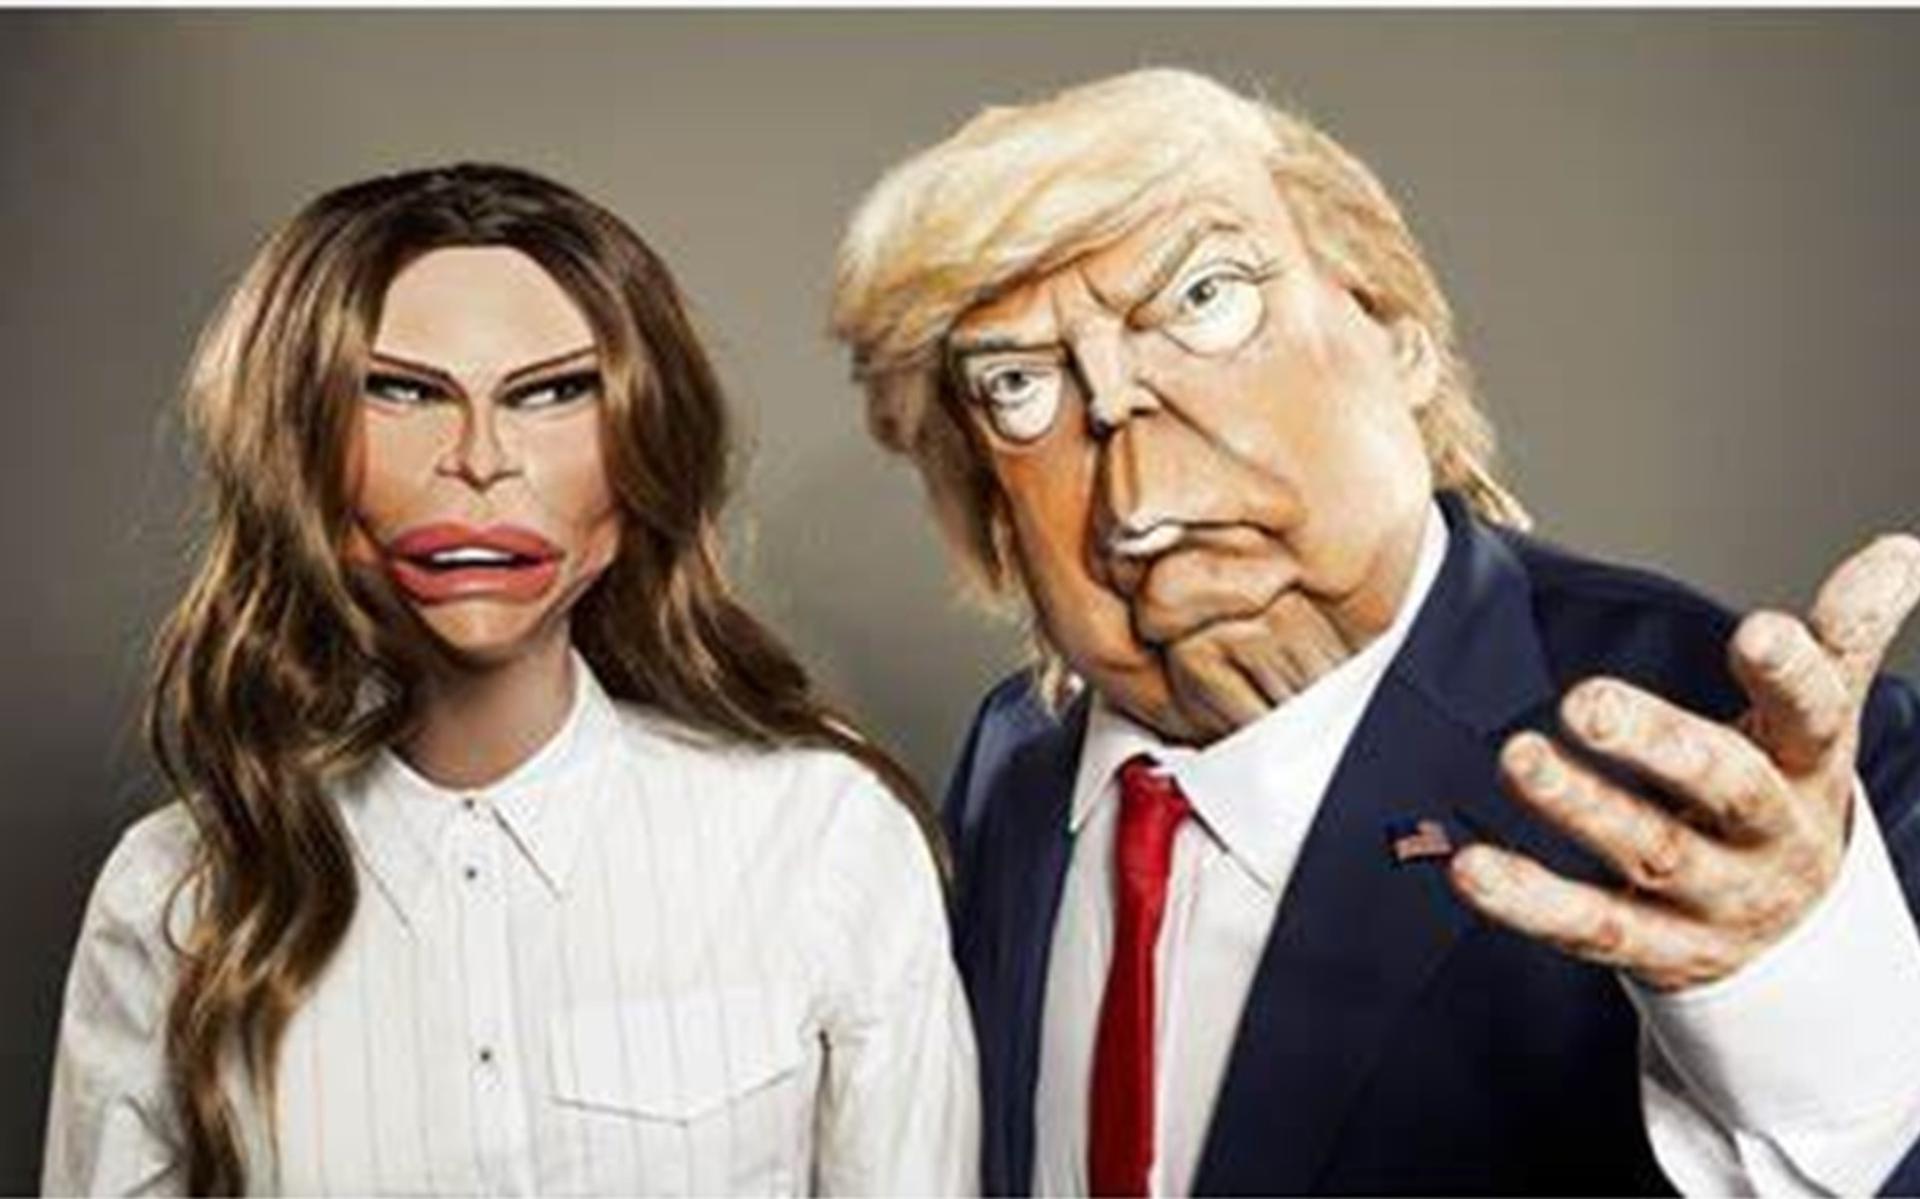 Melania en Donald Trump volgens de makers van Spitting Image.